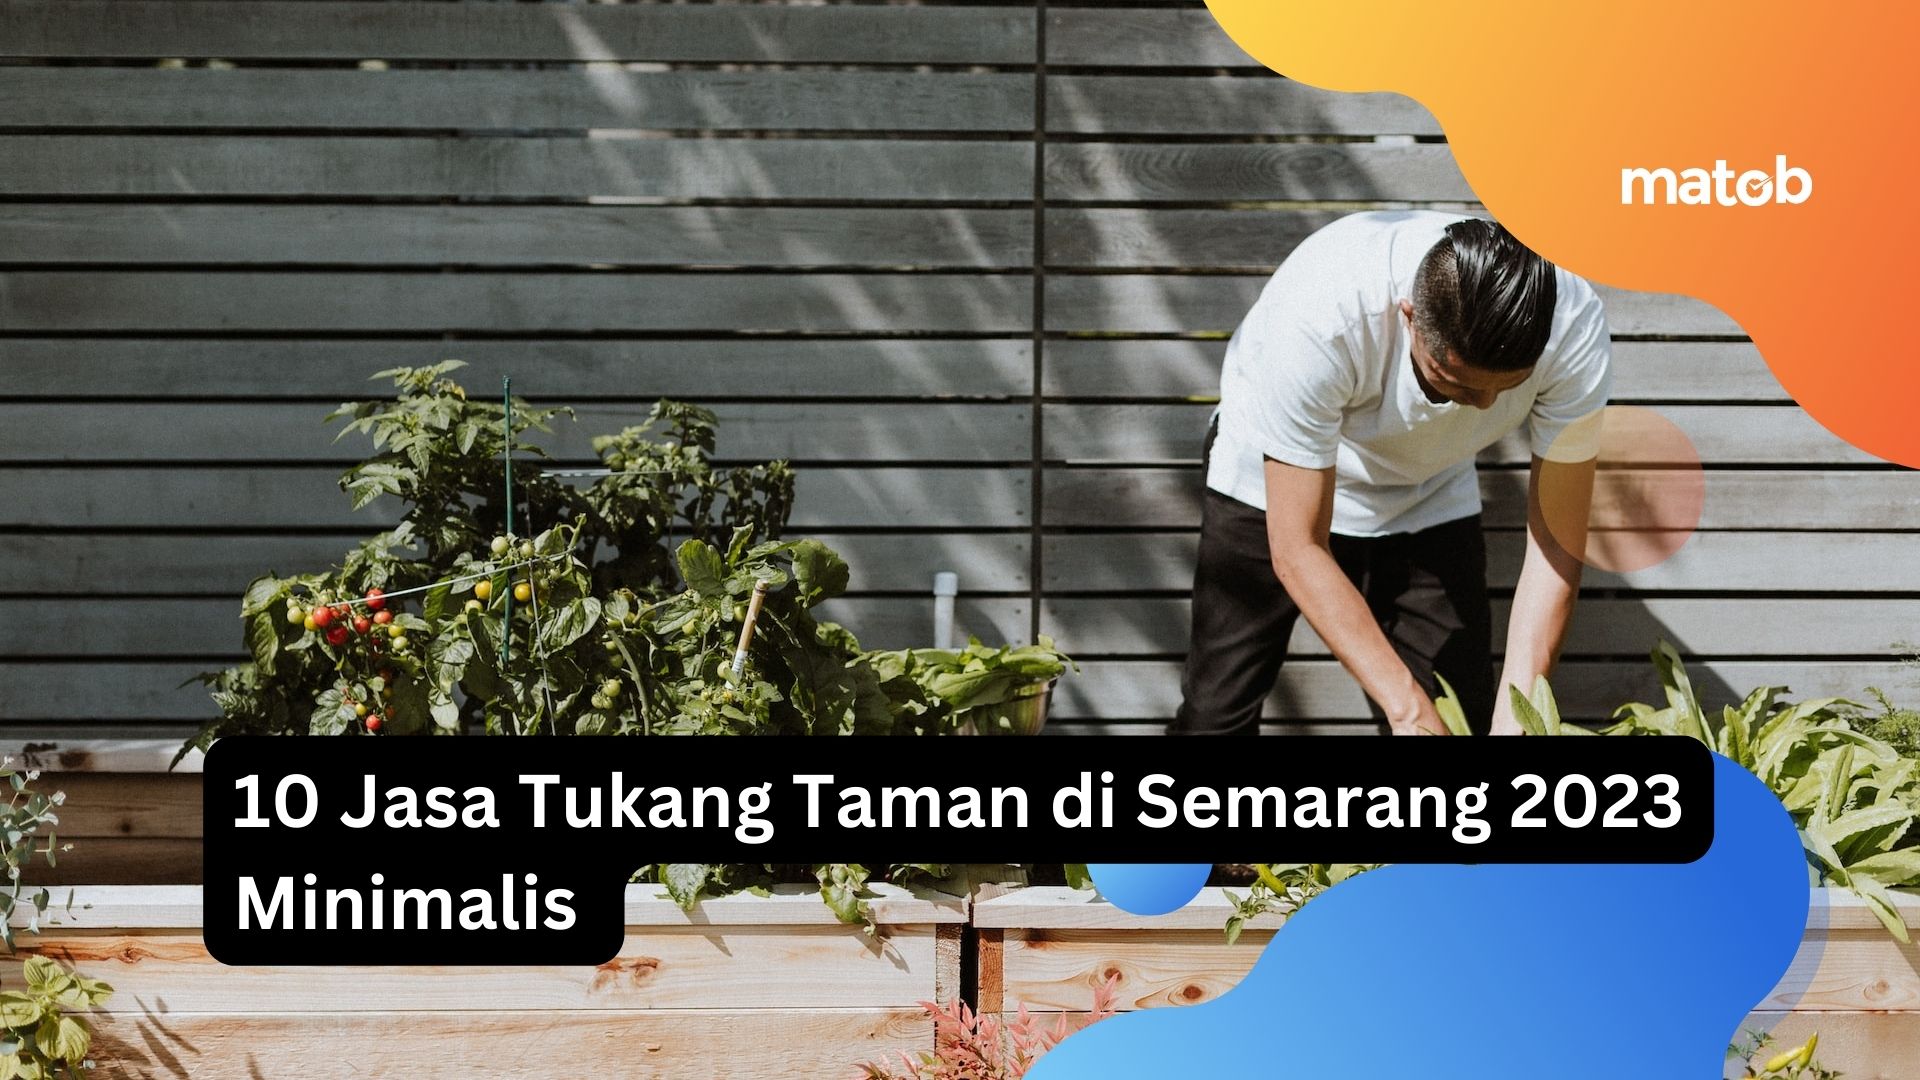 10 Jasa Tukang Taman di Semarang 2023 Minimalis